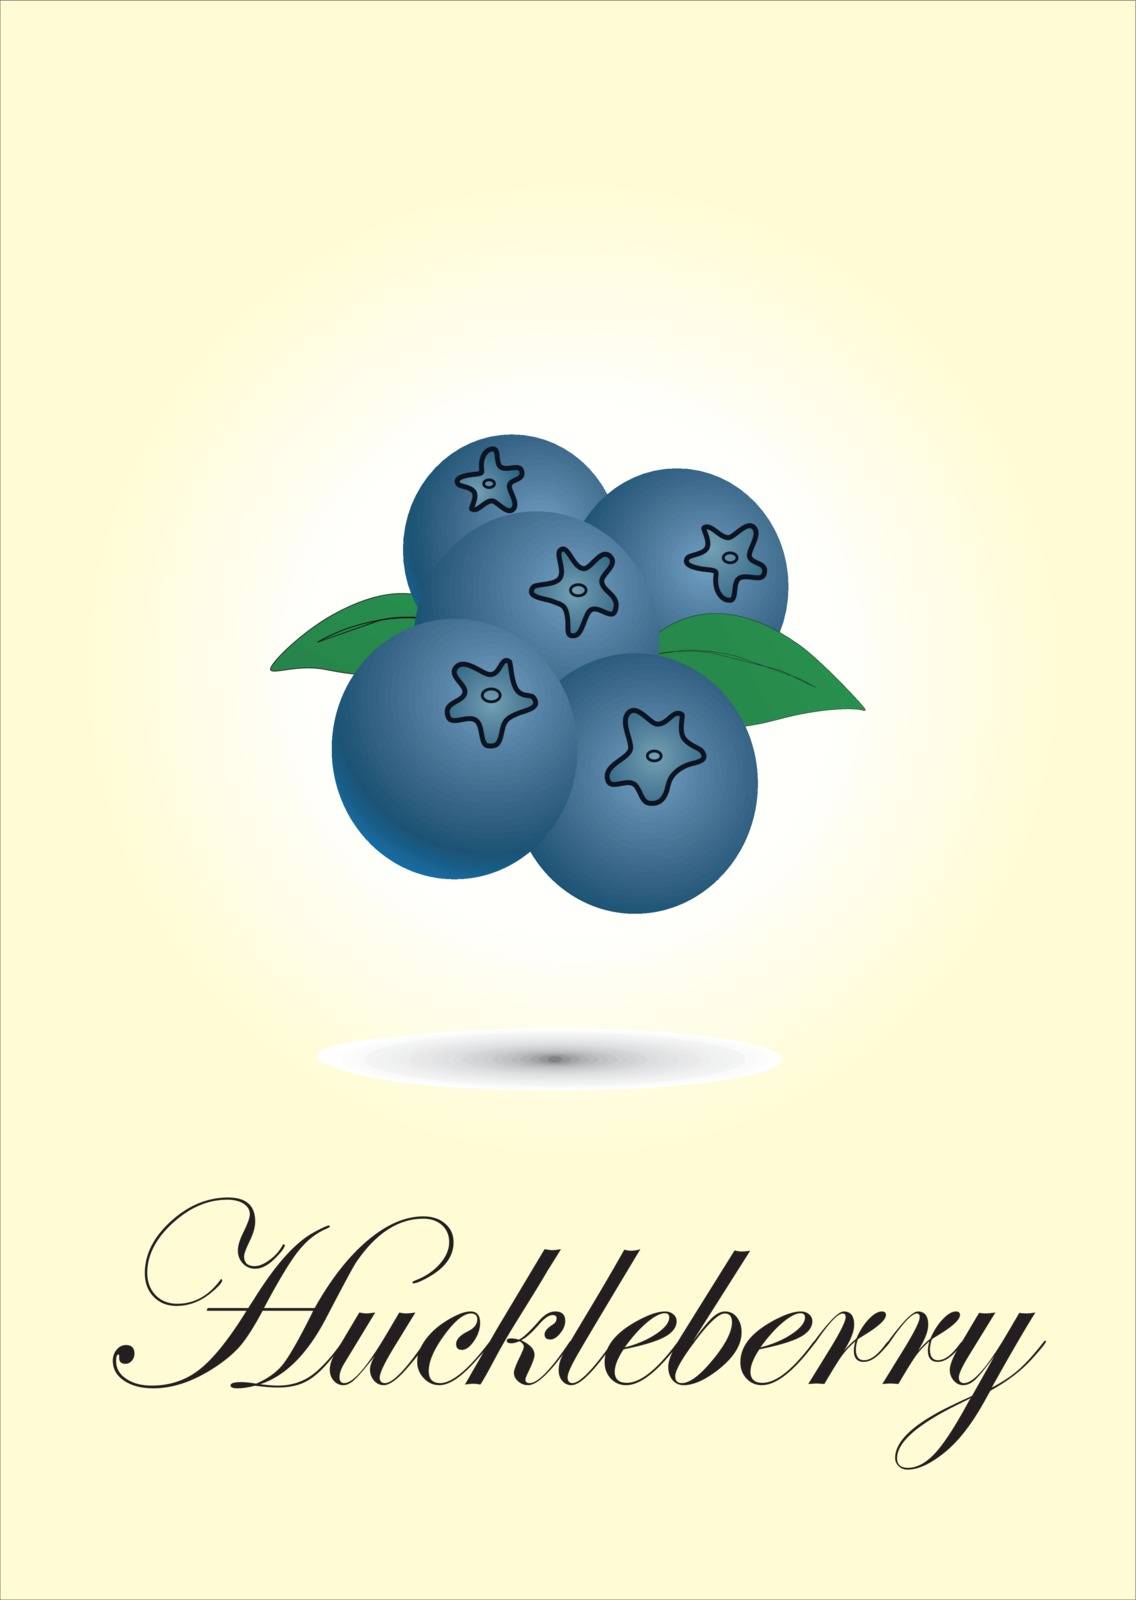 Huckleberry chart vector illustration